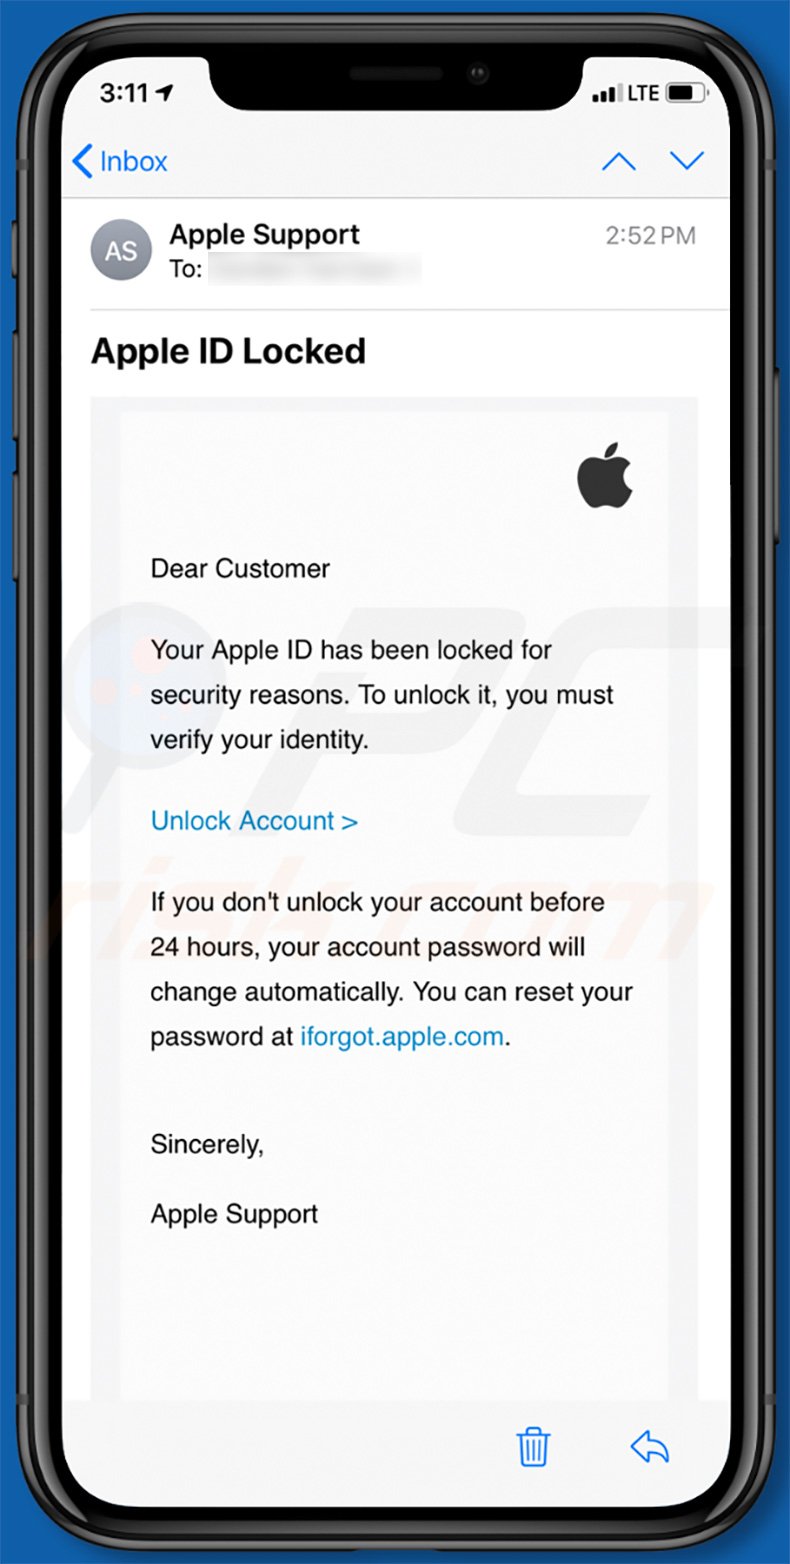 iforgot.apple.com email scam variant 2